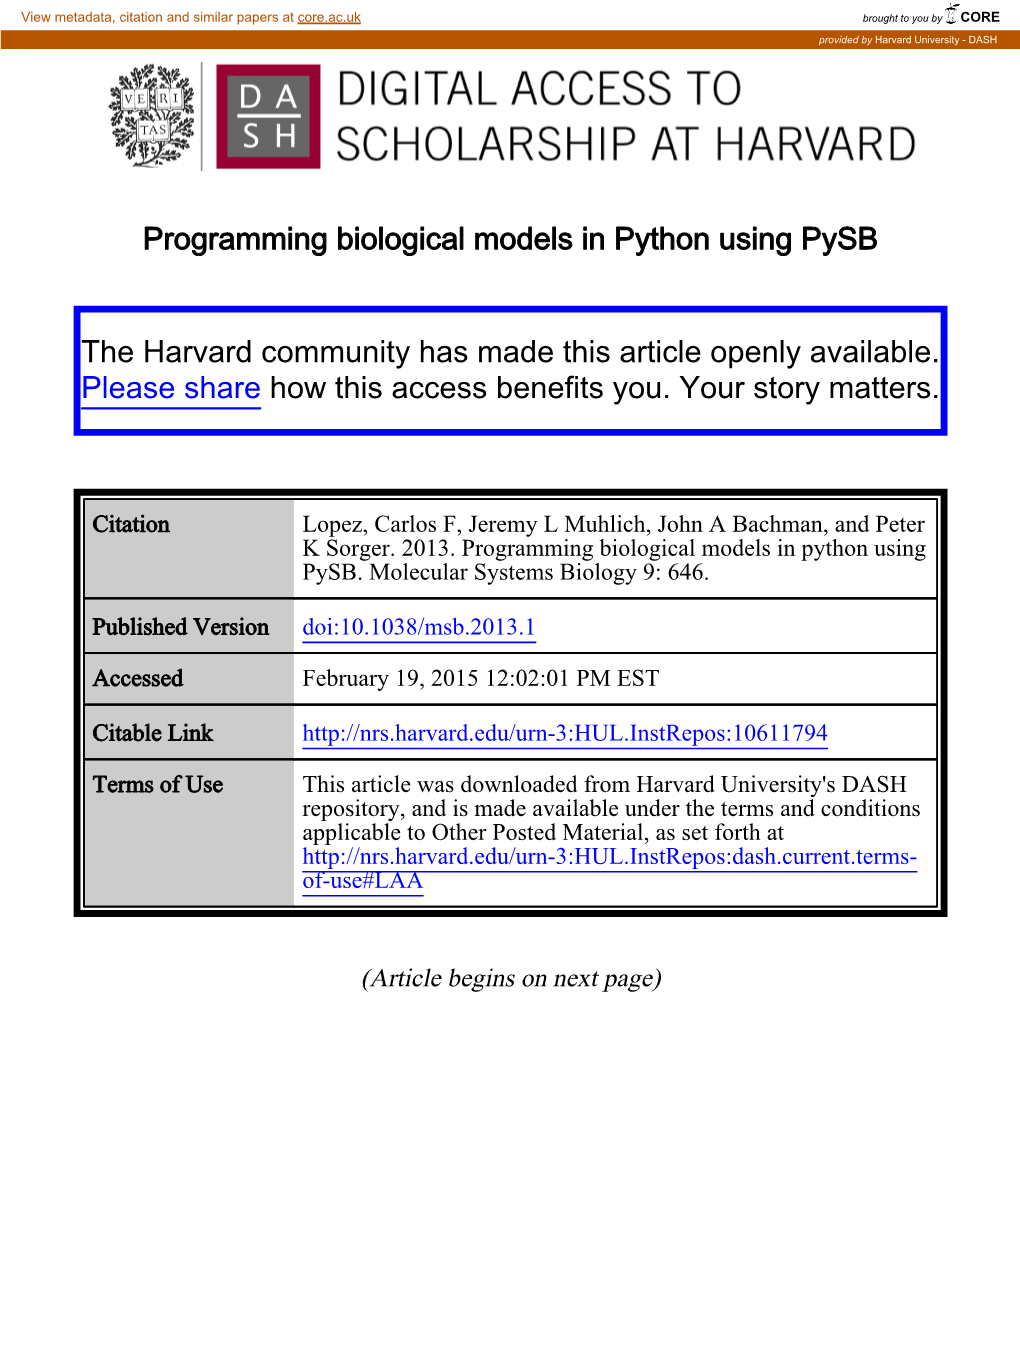 Programming Biological Models in Python Using Pysb